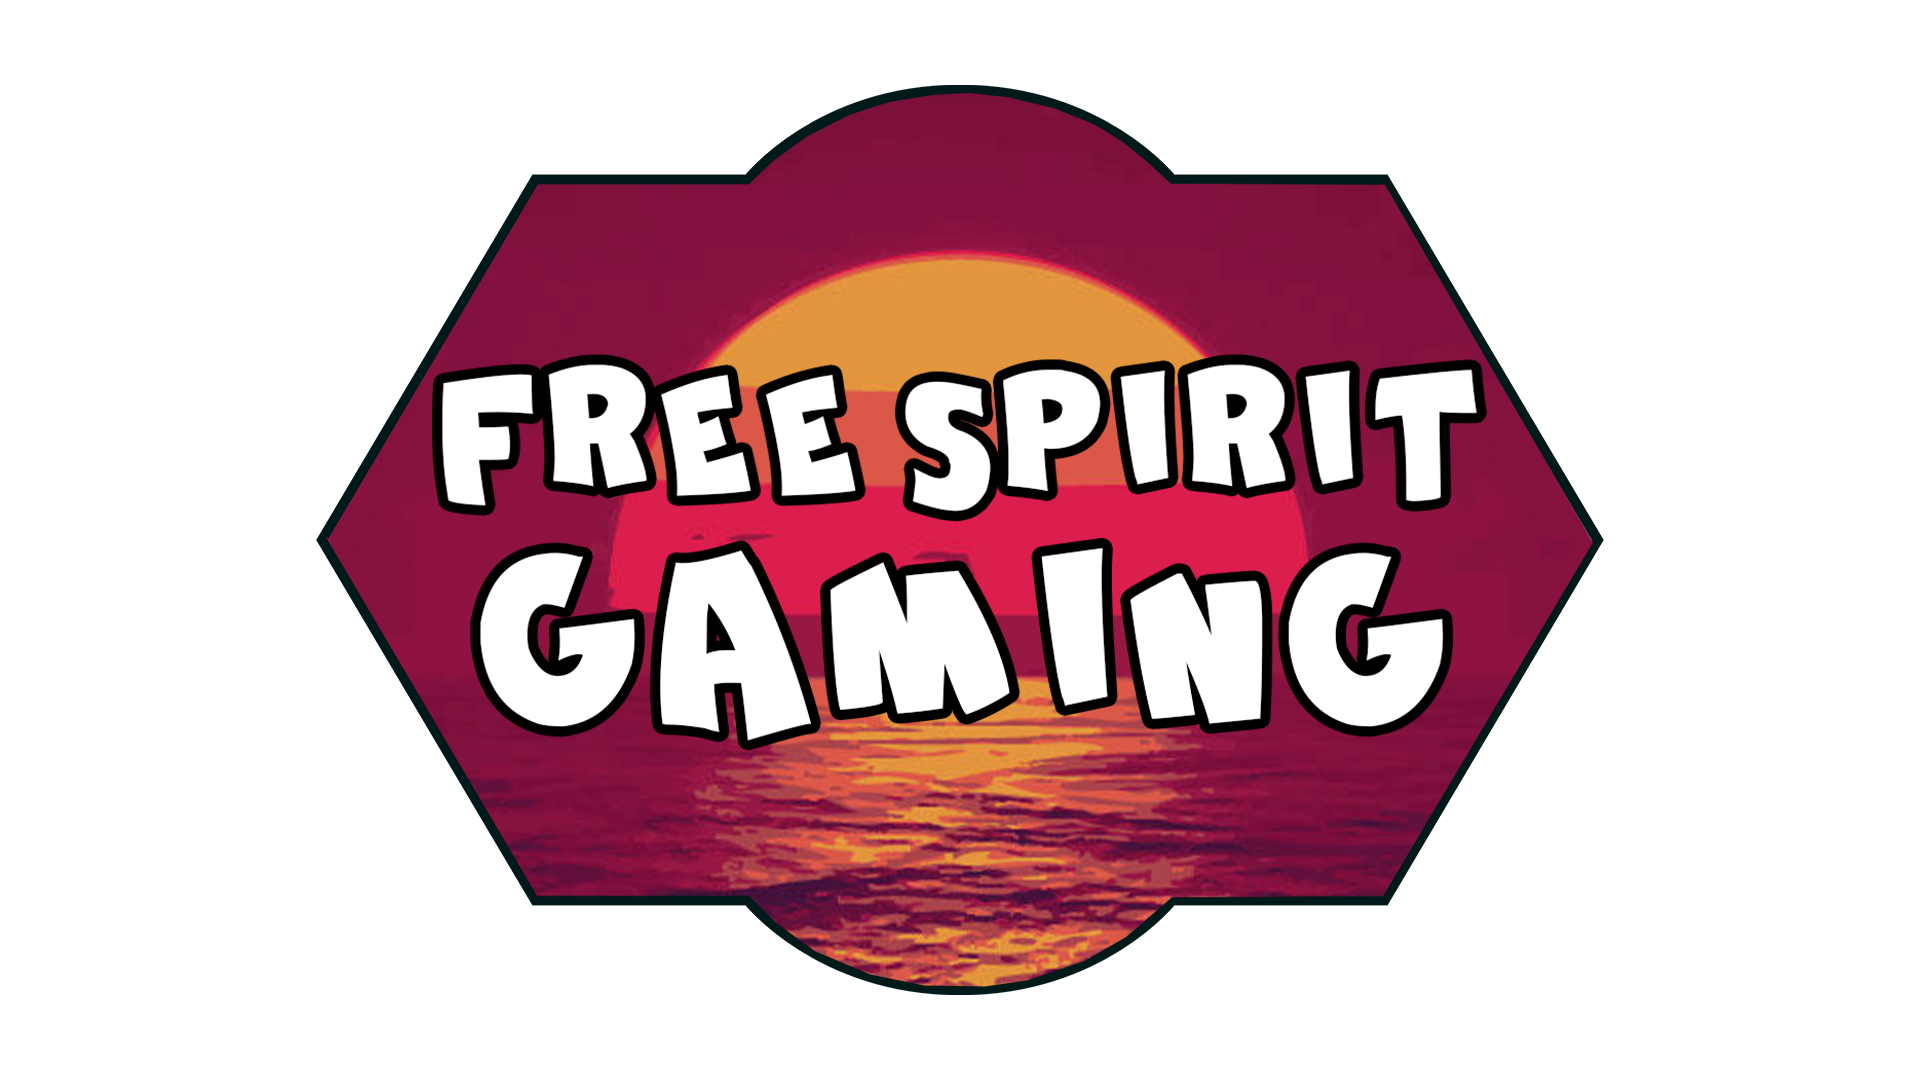 Mario Kart Central Tournaments Free Spirit Gaming $500 FFA